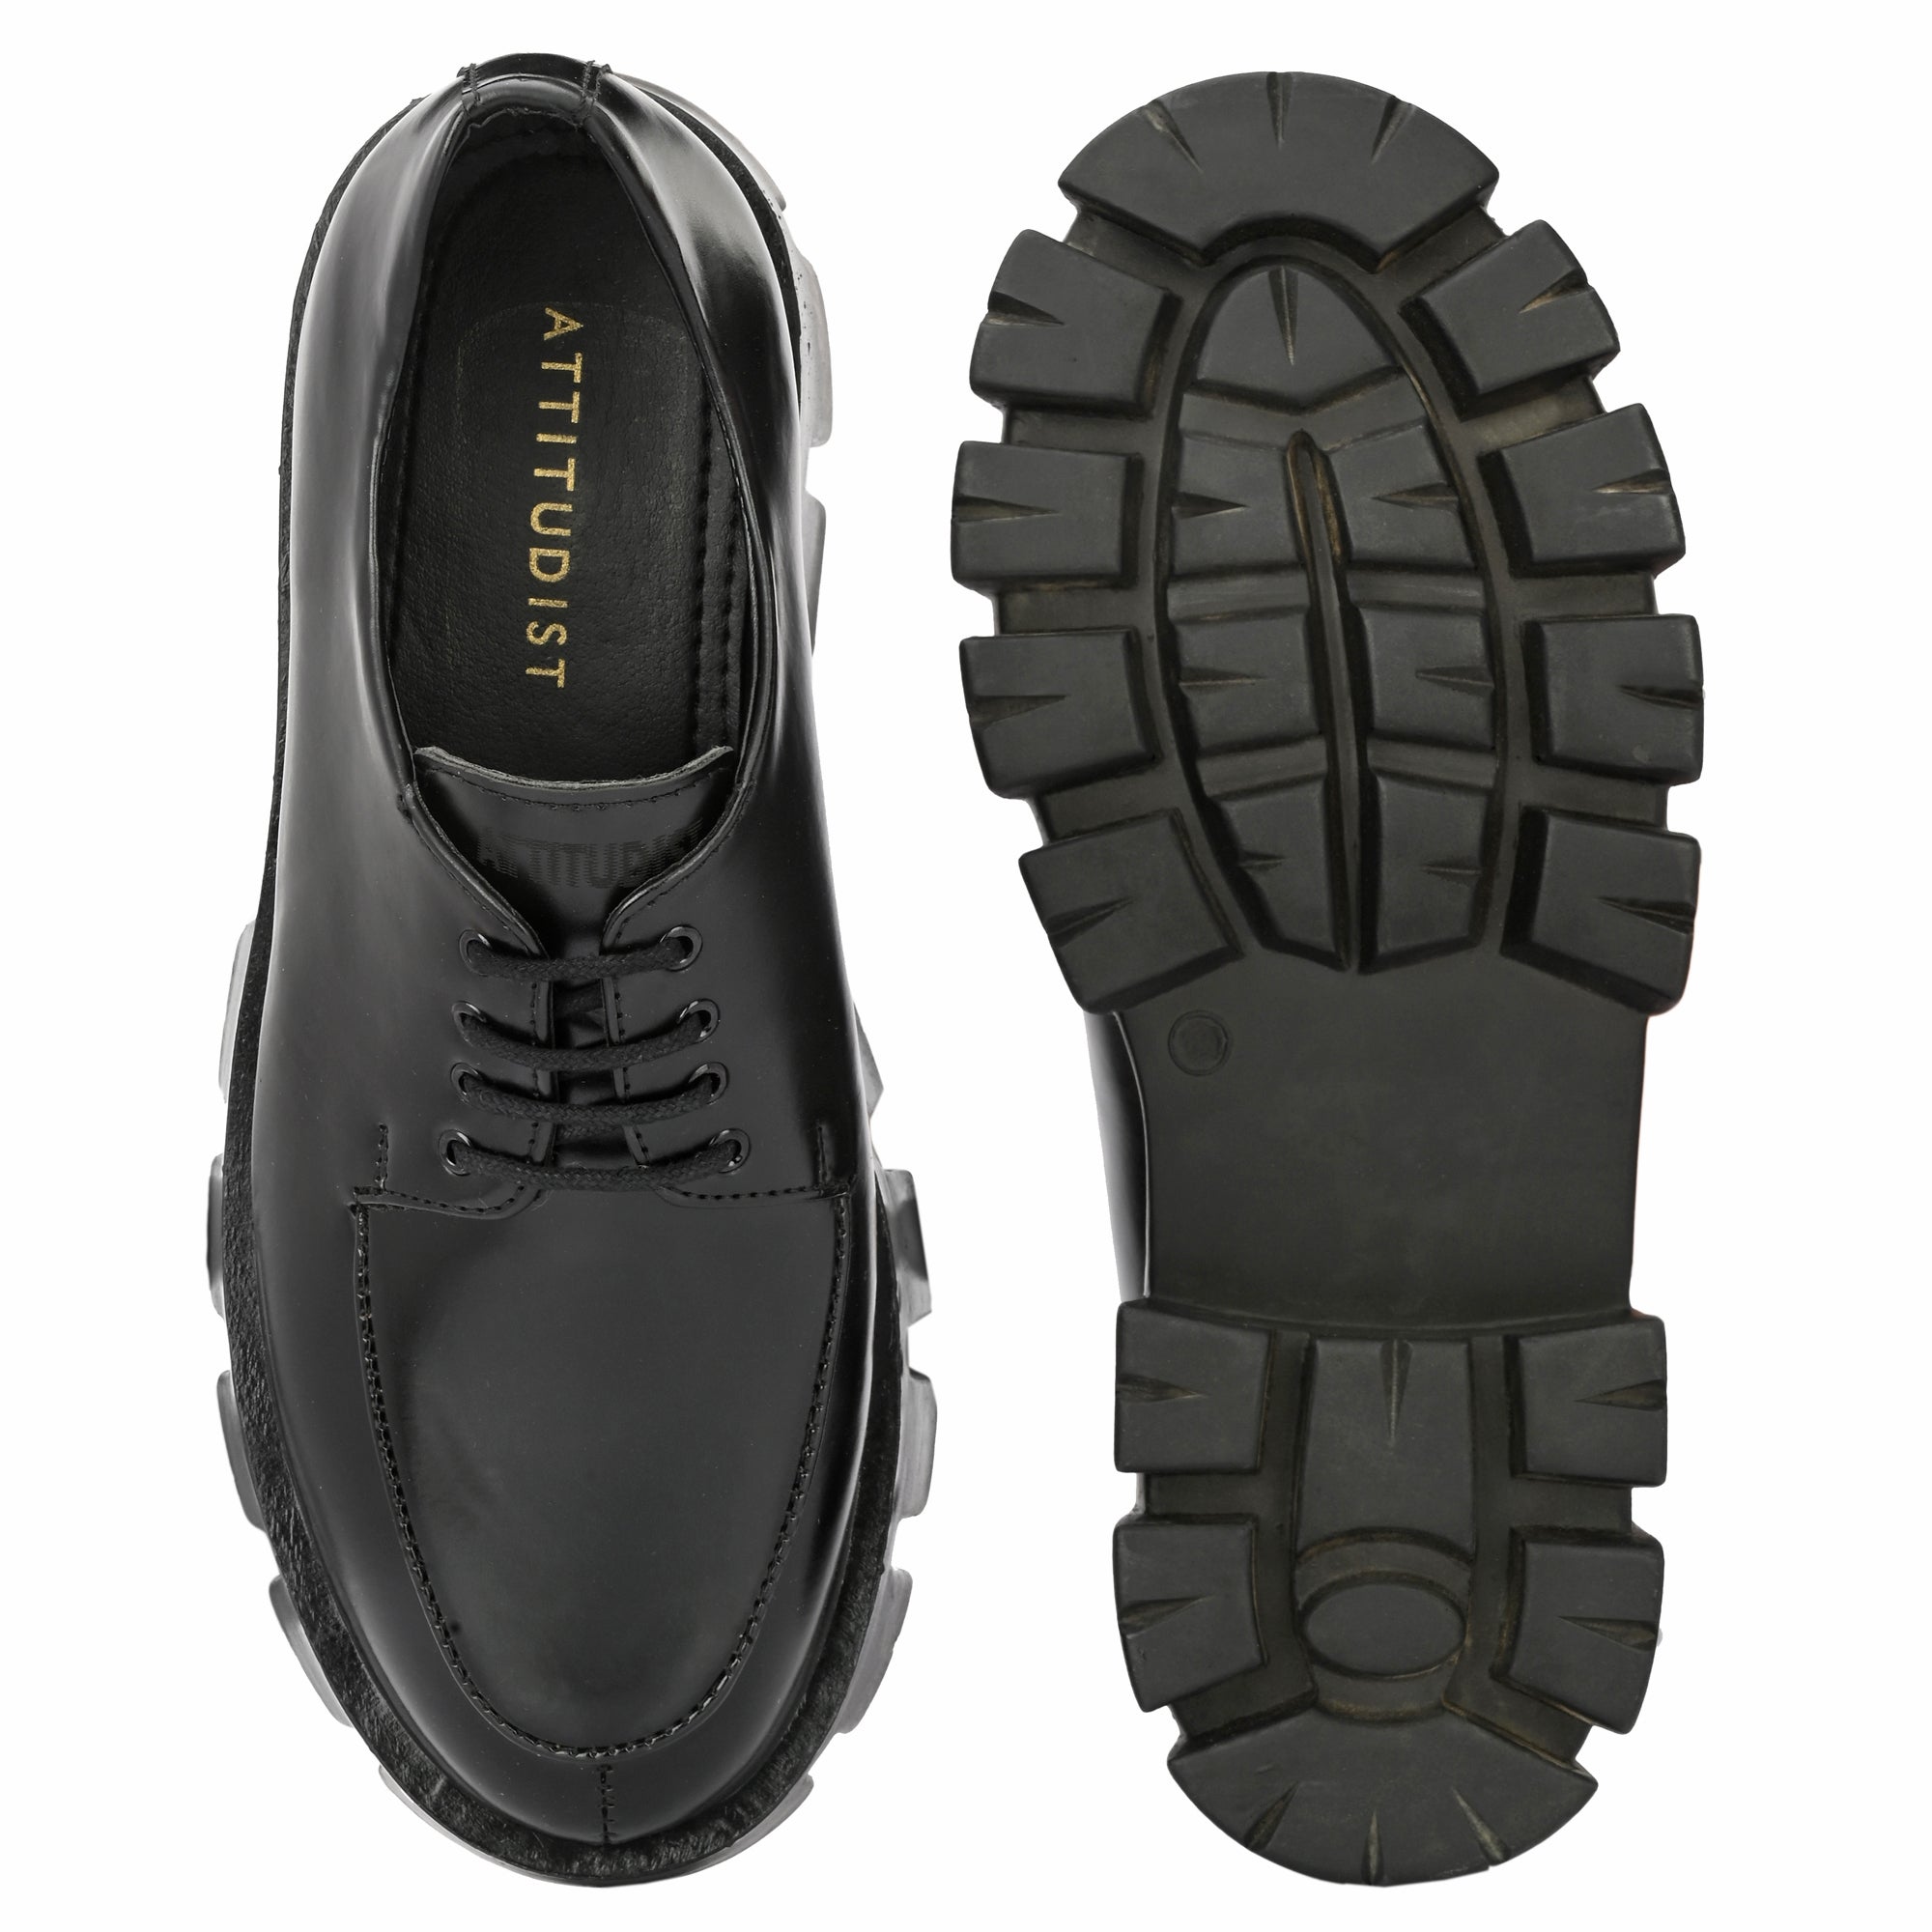 British Men's Shoes Business Formal 8cm High Heels Buckle Leather Dress  Shoes US | eBay